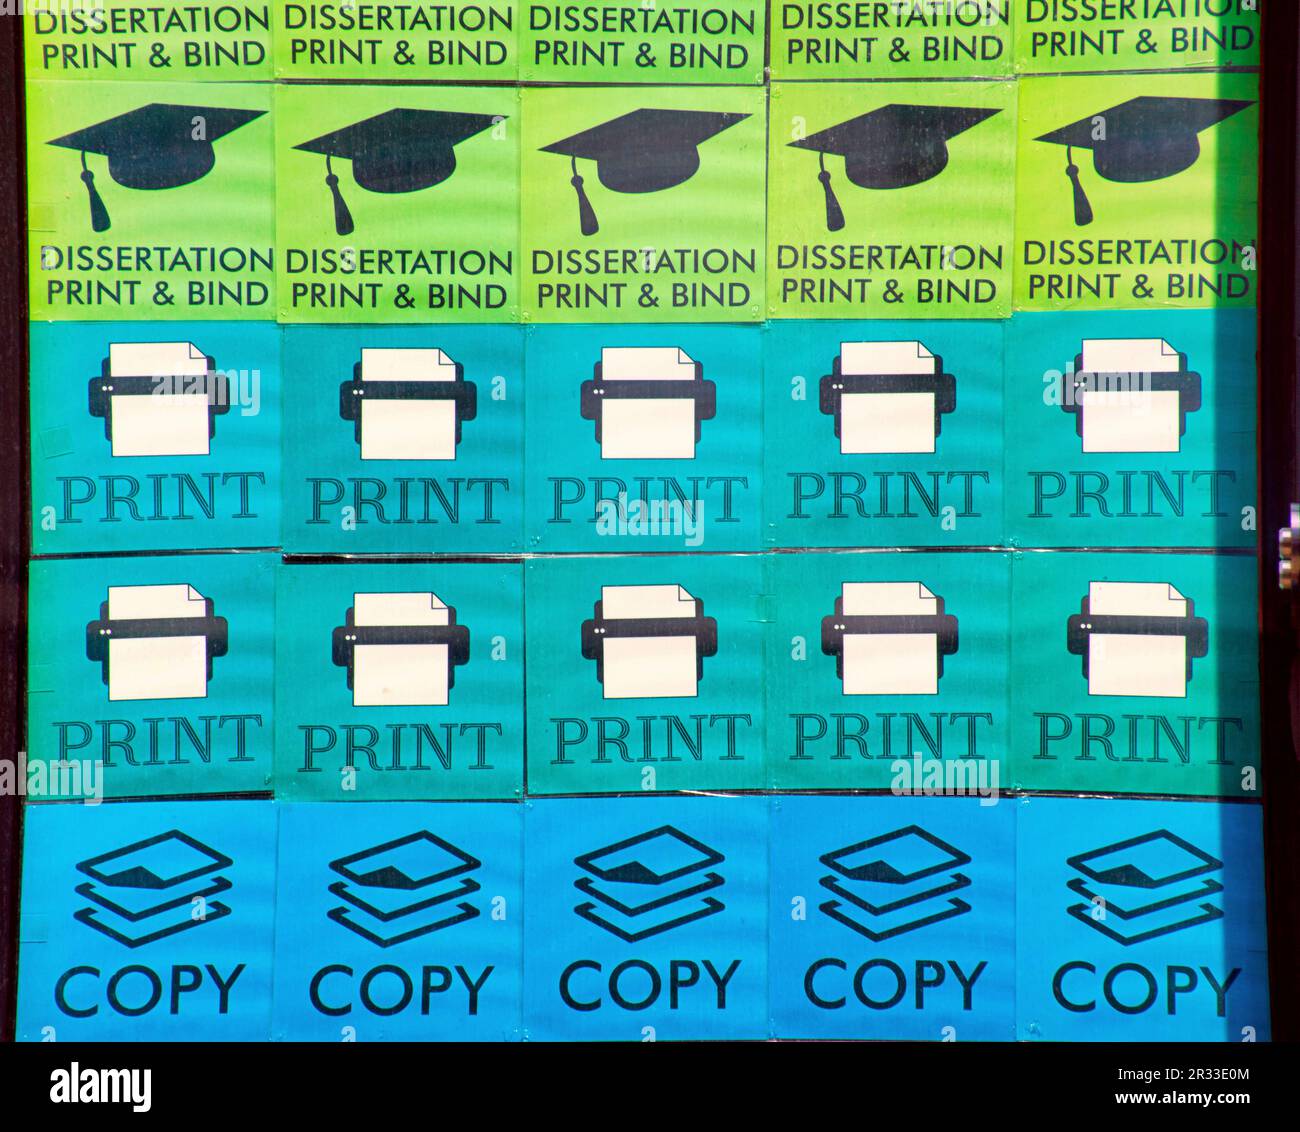 dissertation print and bind  copy service Stock Photo